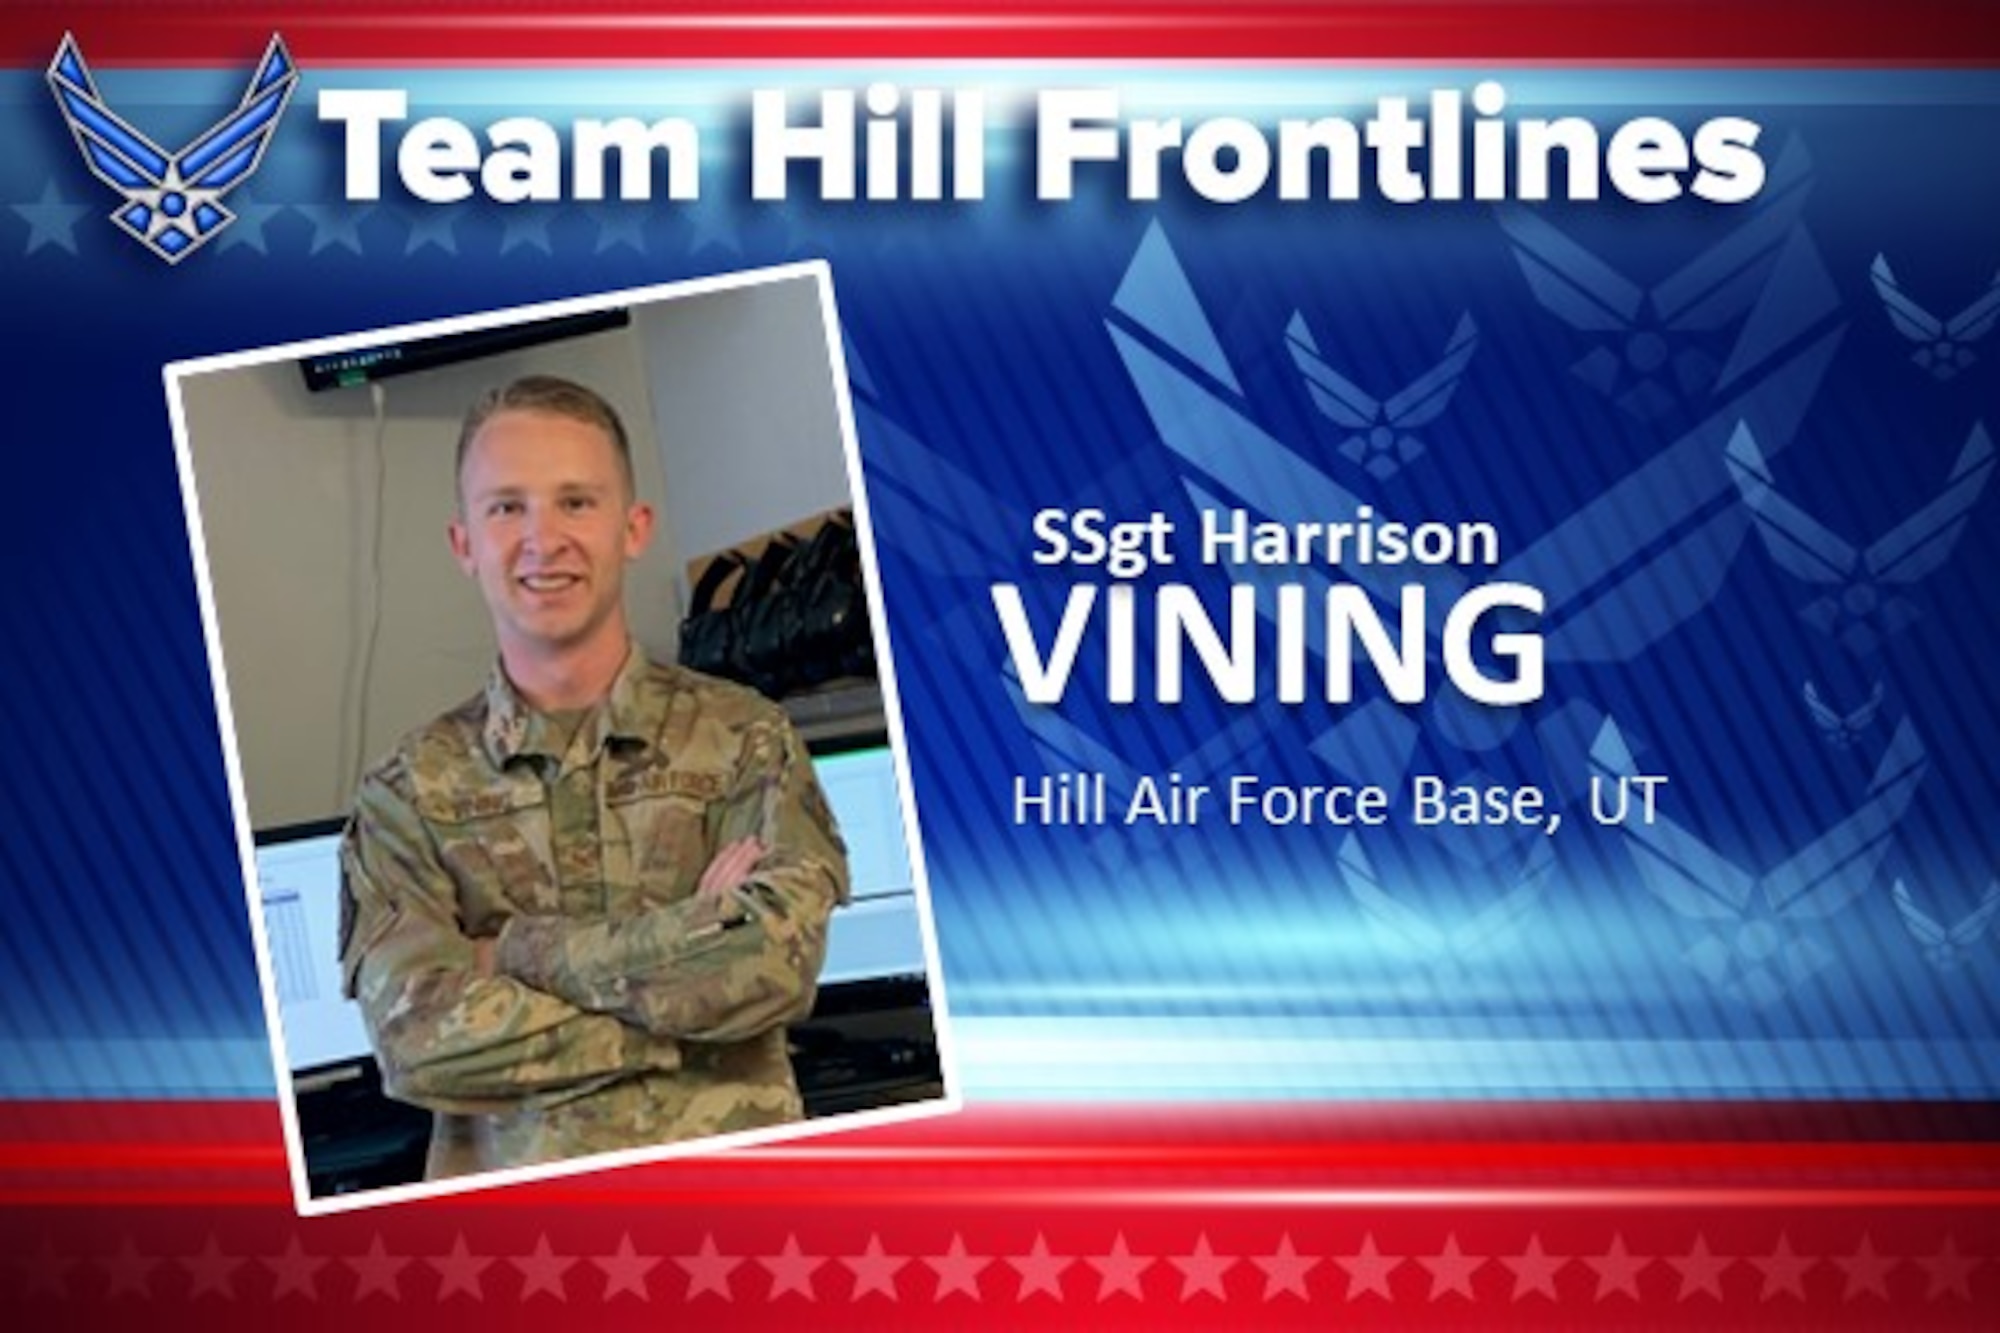 Team Hill Frontlines: SSgt Harrison Vining